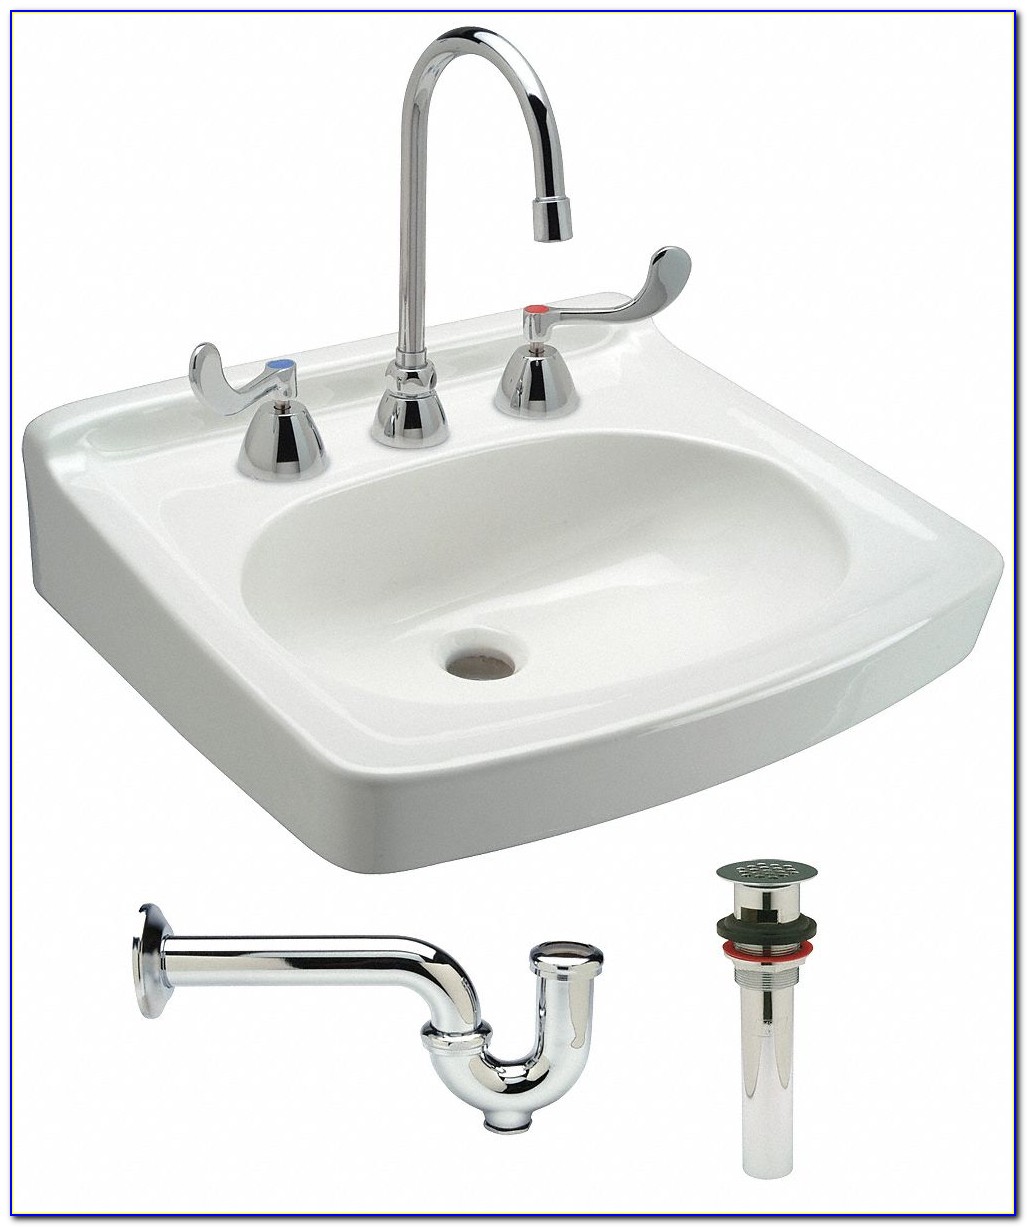 Zurn Clinical Service Sink Faucet Faucet Home Design